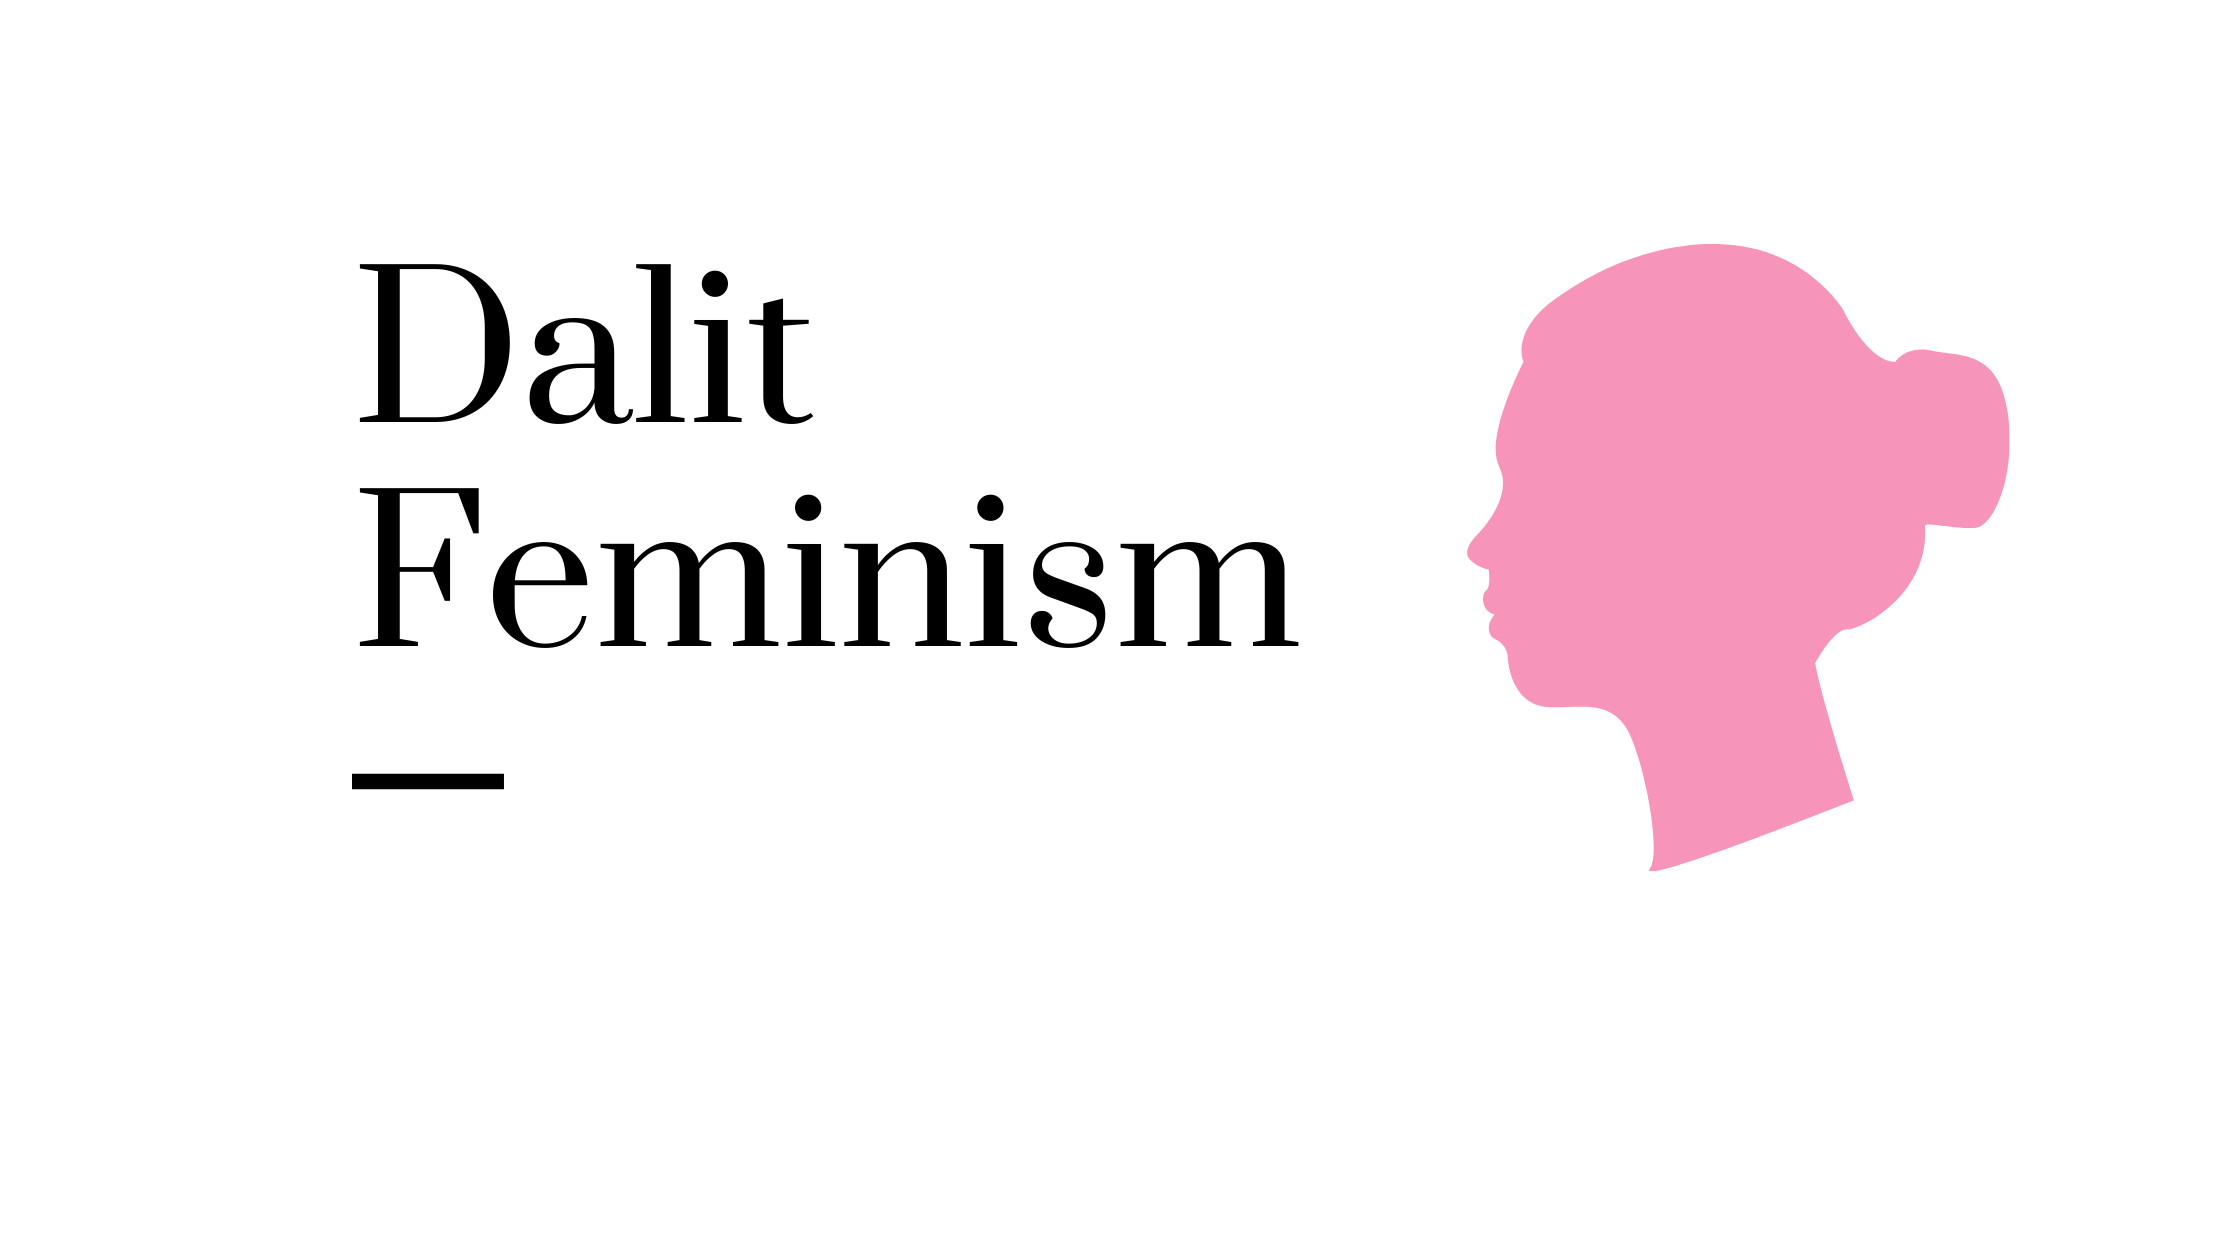 Dalit Feminism meaning